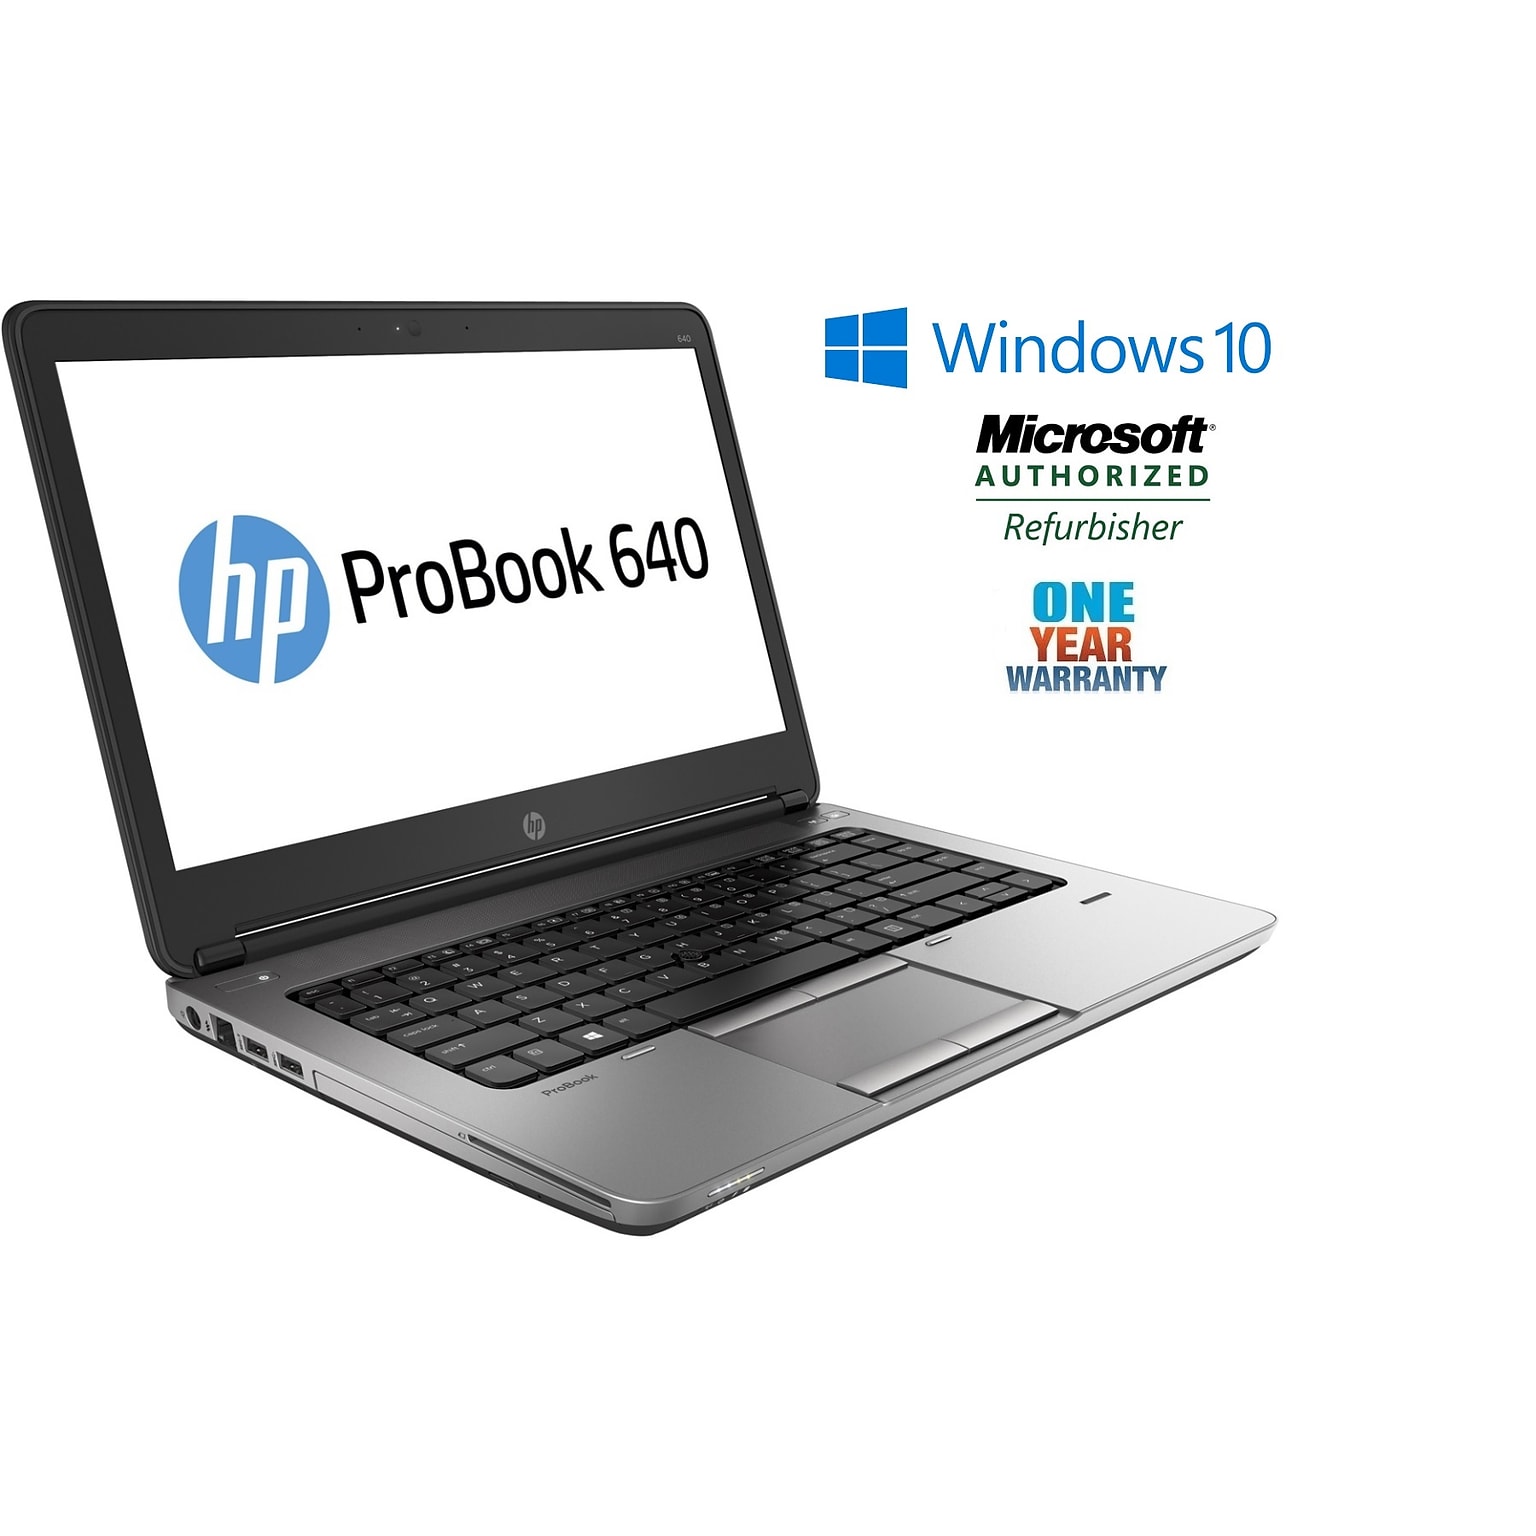 HP ProBook 640 G1 14 Refurbished Laptop, Intel i5 2.6 GHz Processor, 8GB Memory, 120GB SSD, Windows 10 Home